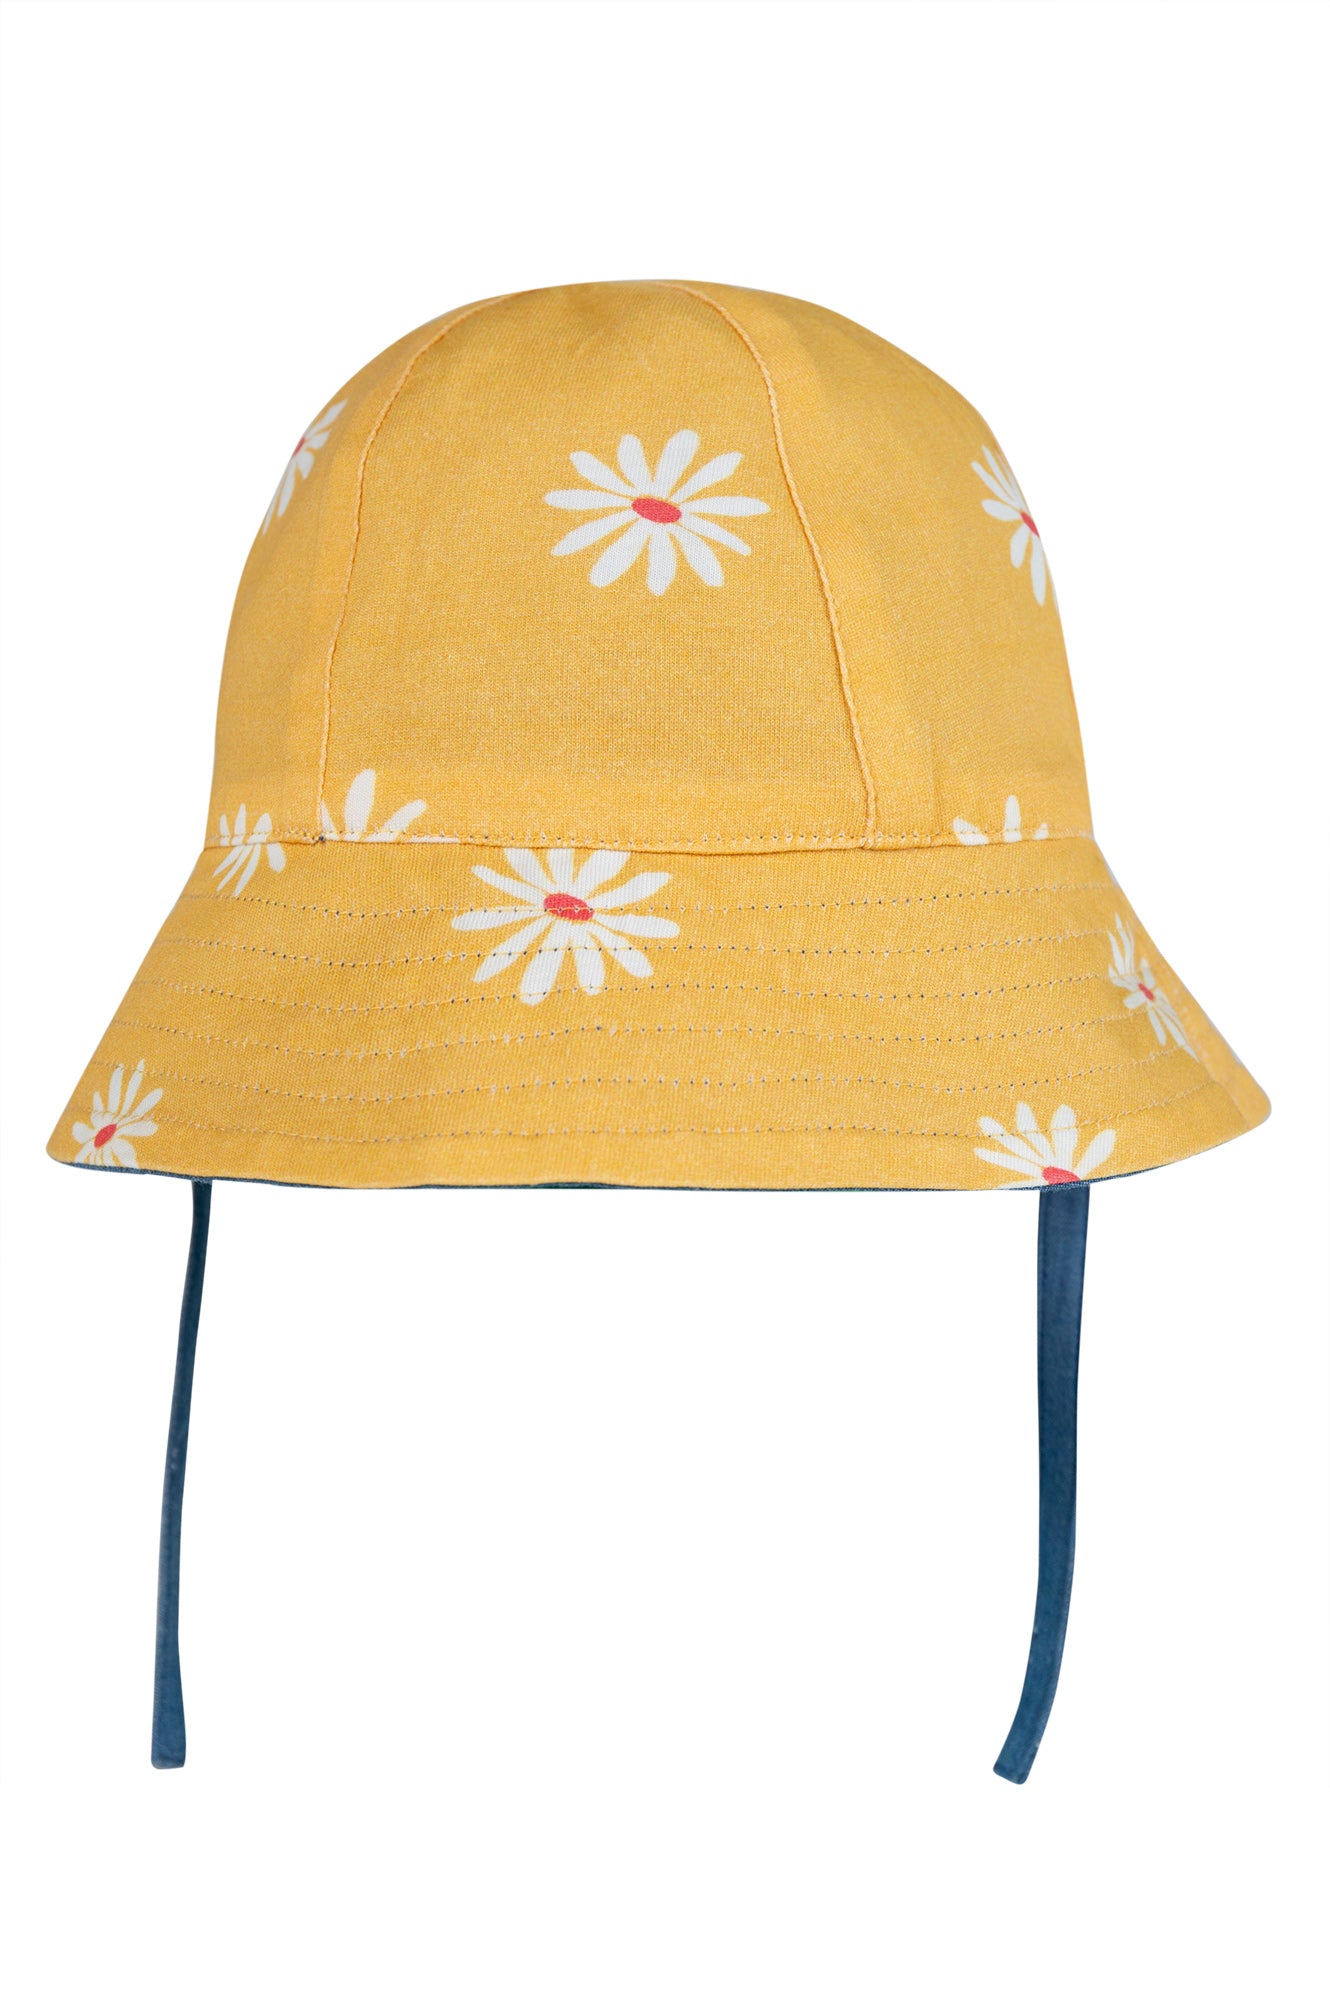 Frugi Helen Reversible Sun Hat Chambray Bumblebee – Dandy Lions Boutique